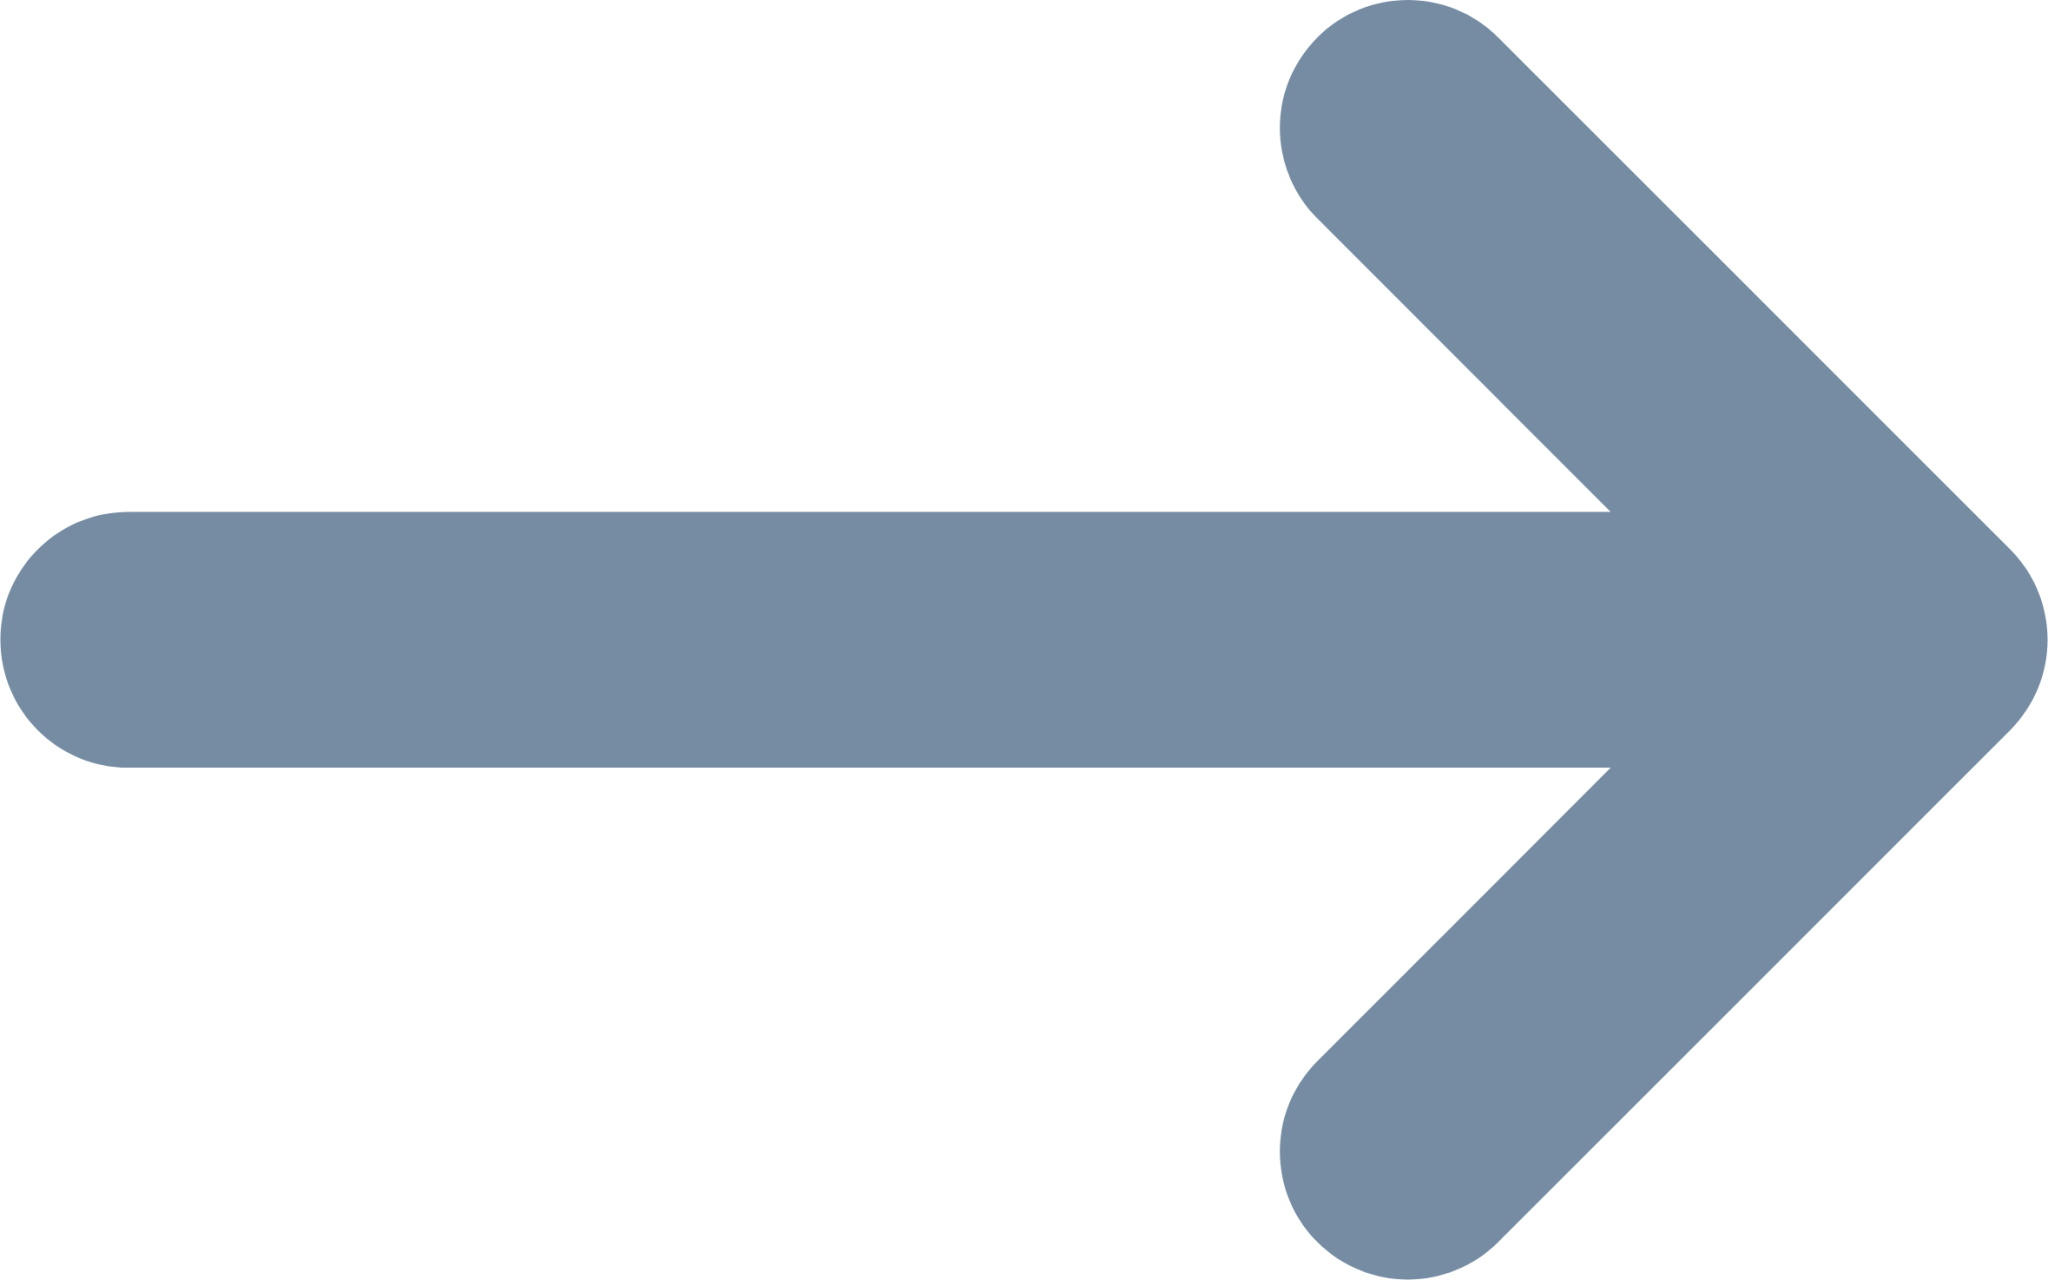 long arrow right icon